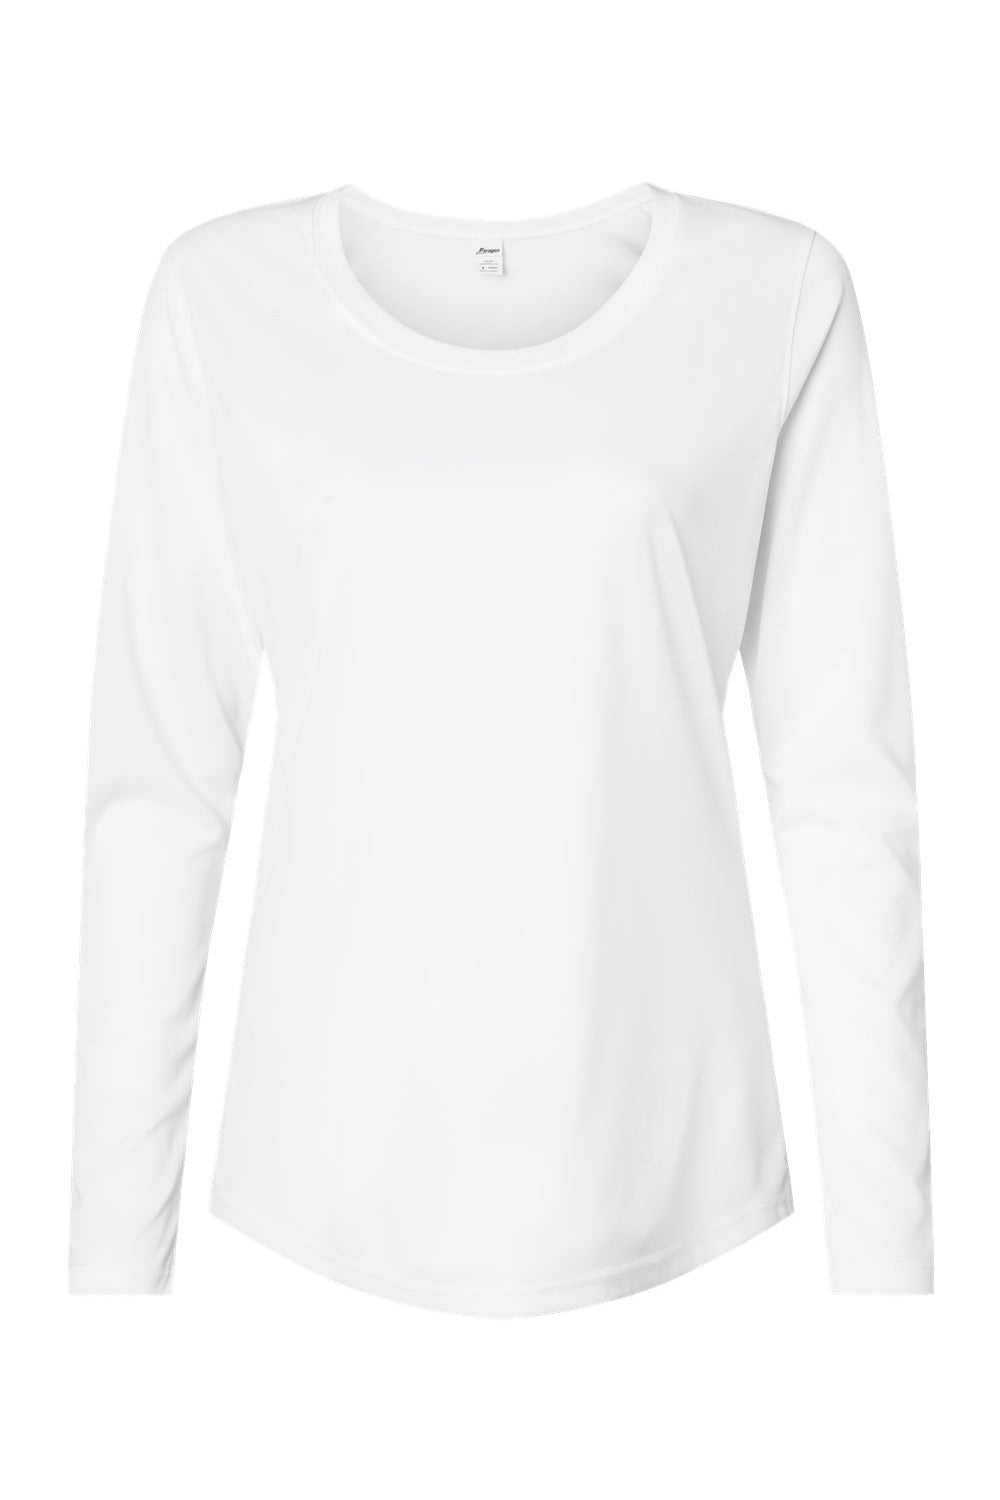 Paragon 214 Womens Islander Performance Long Sleeve Scoop Neck T-Shirt White Flat Front